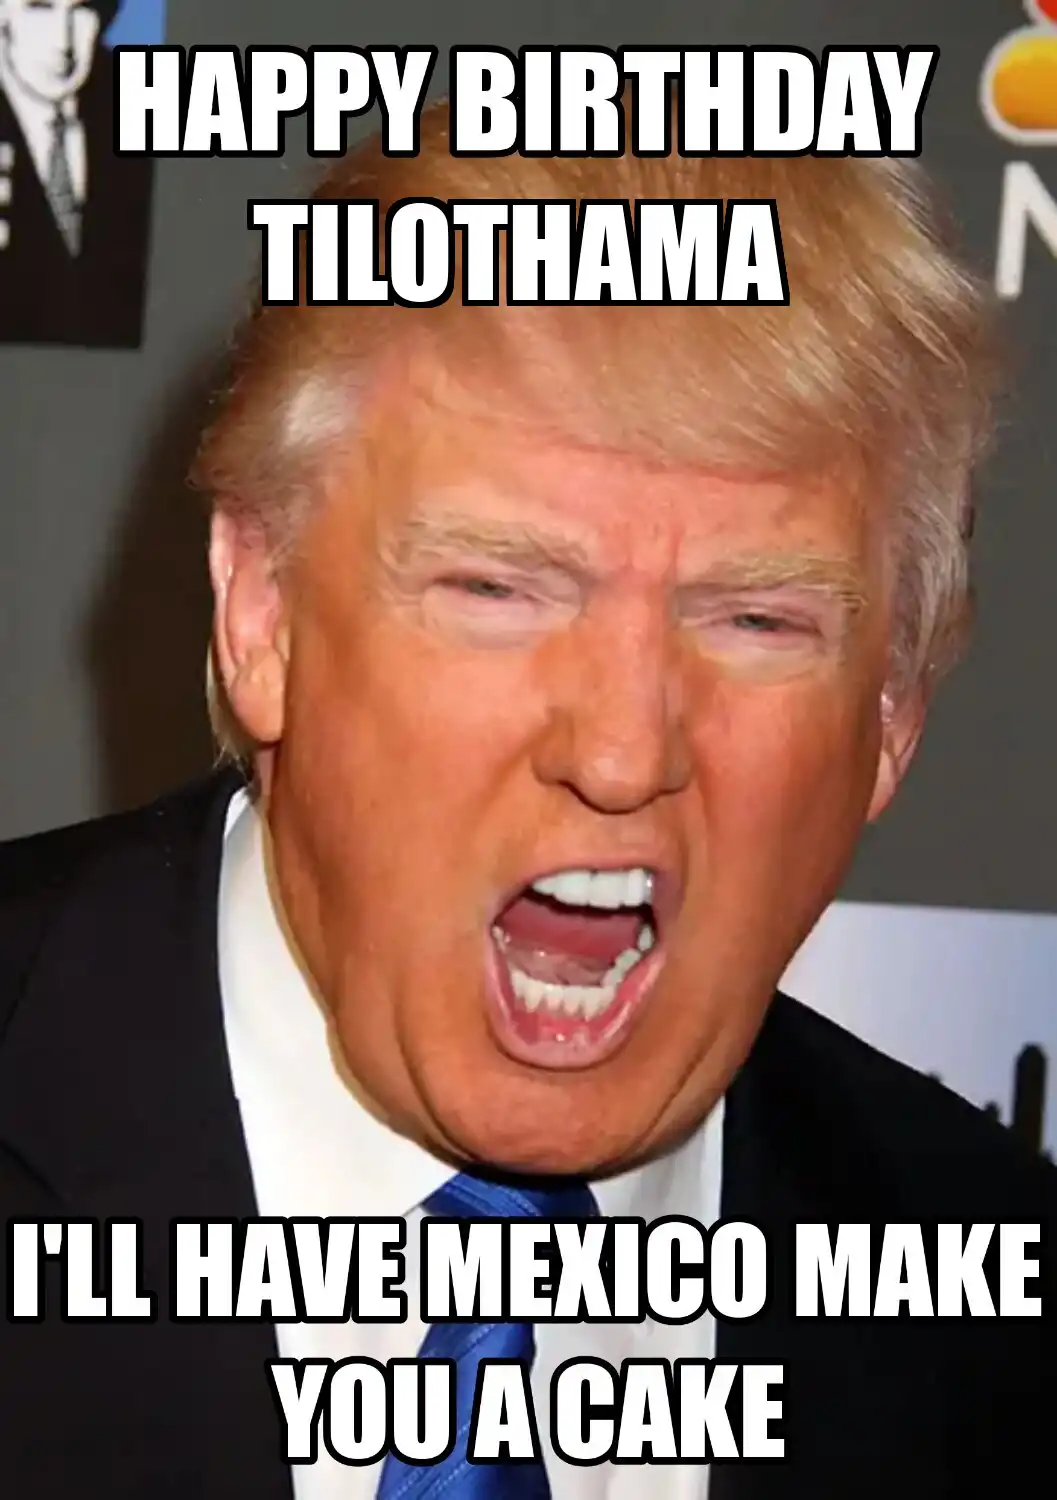 Happy Birthday Tilothama Mexico Make You A Cake Meme